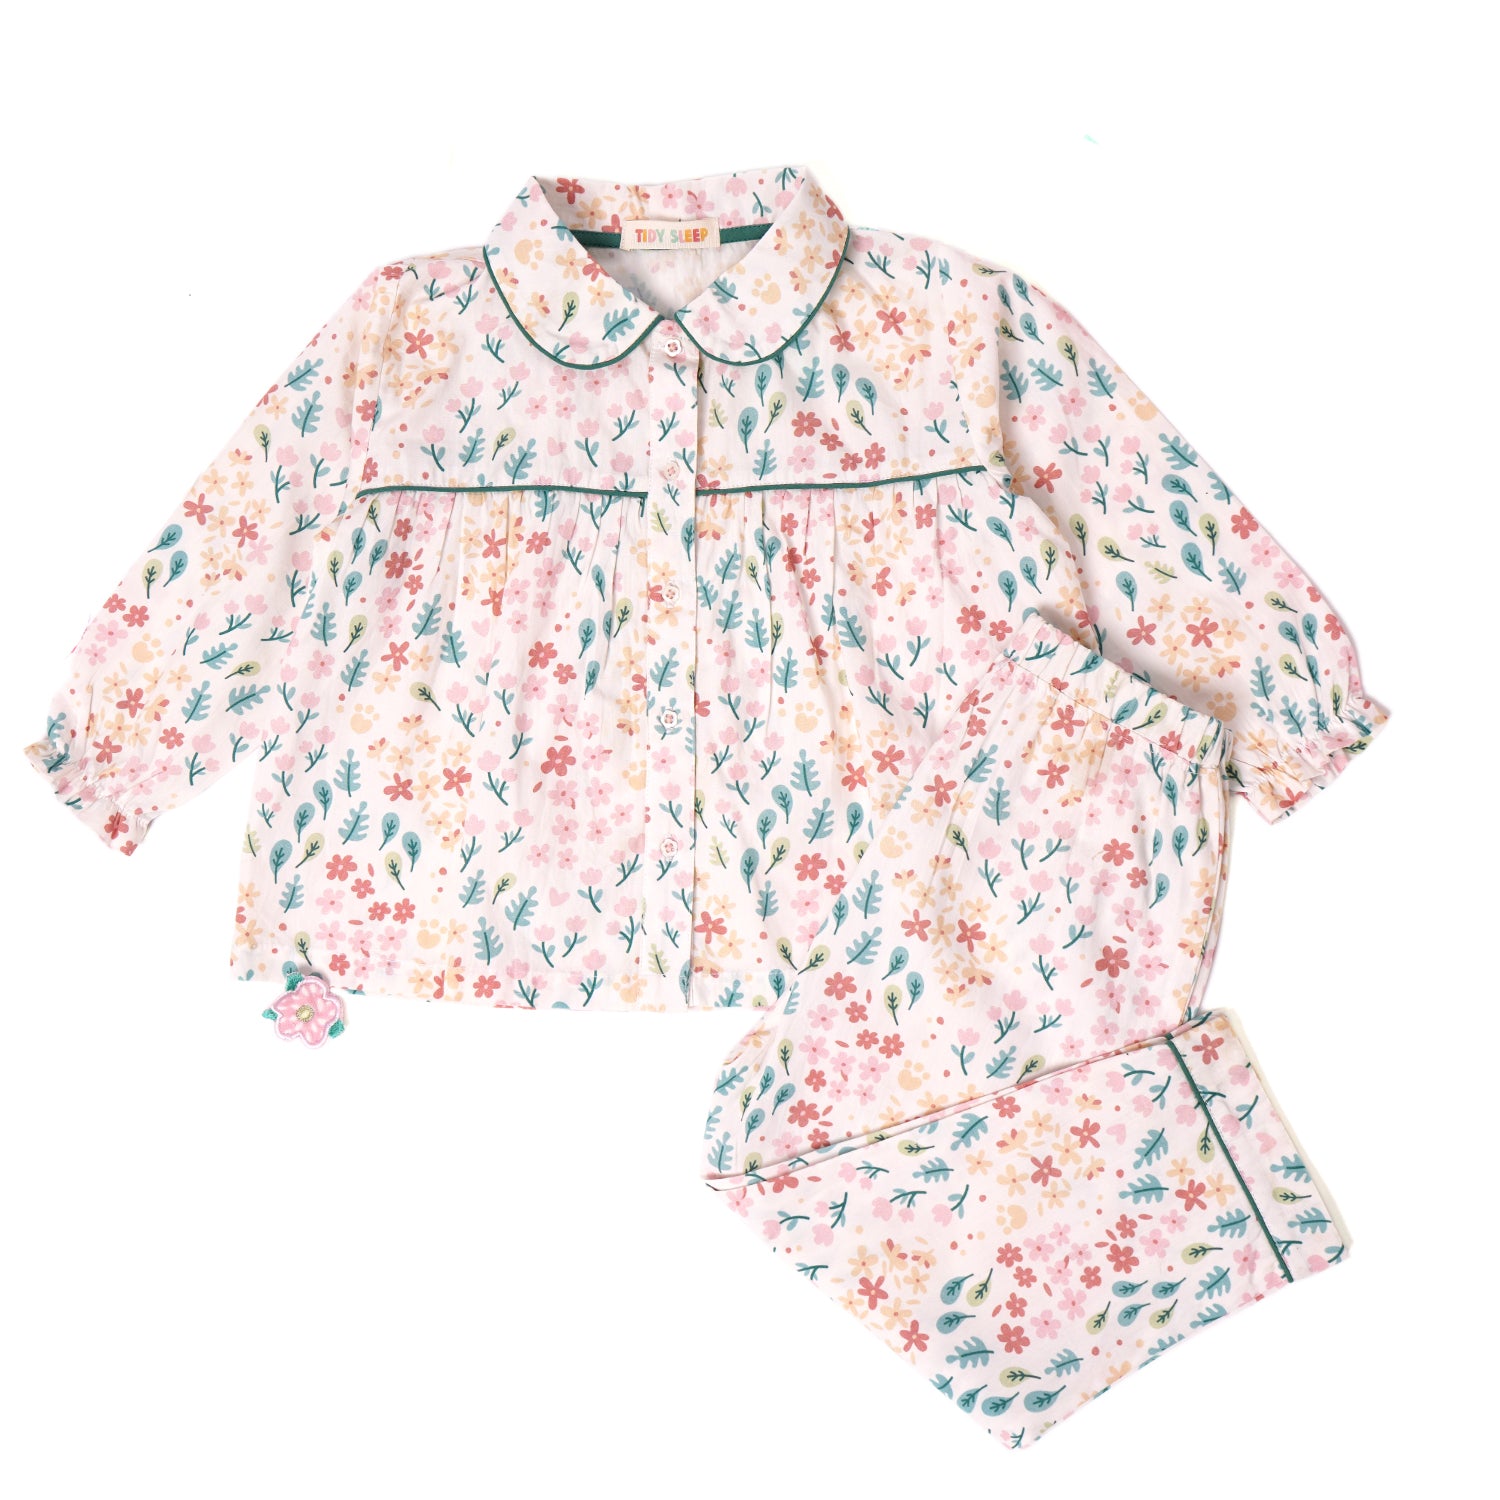 100% Cotton | Floral Print Baby Girls  Night Suit | Nightwear | Sleepwear for Baby/Kids